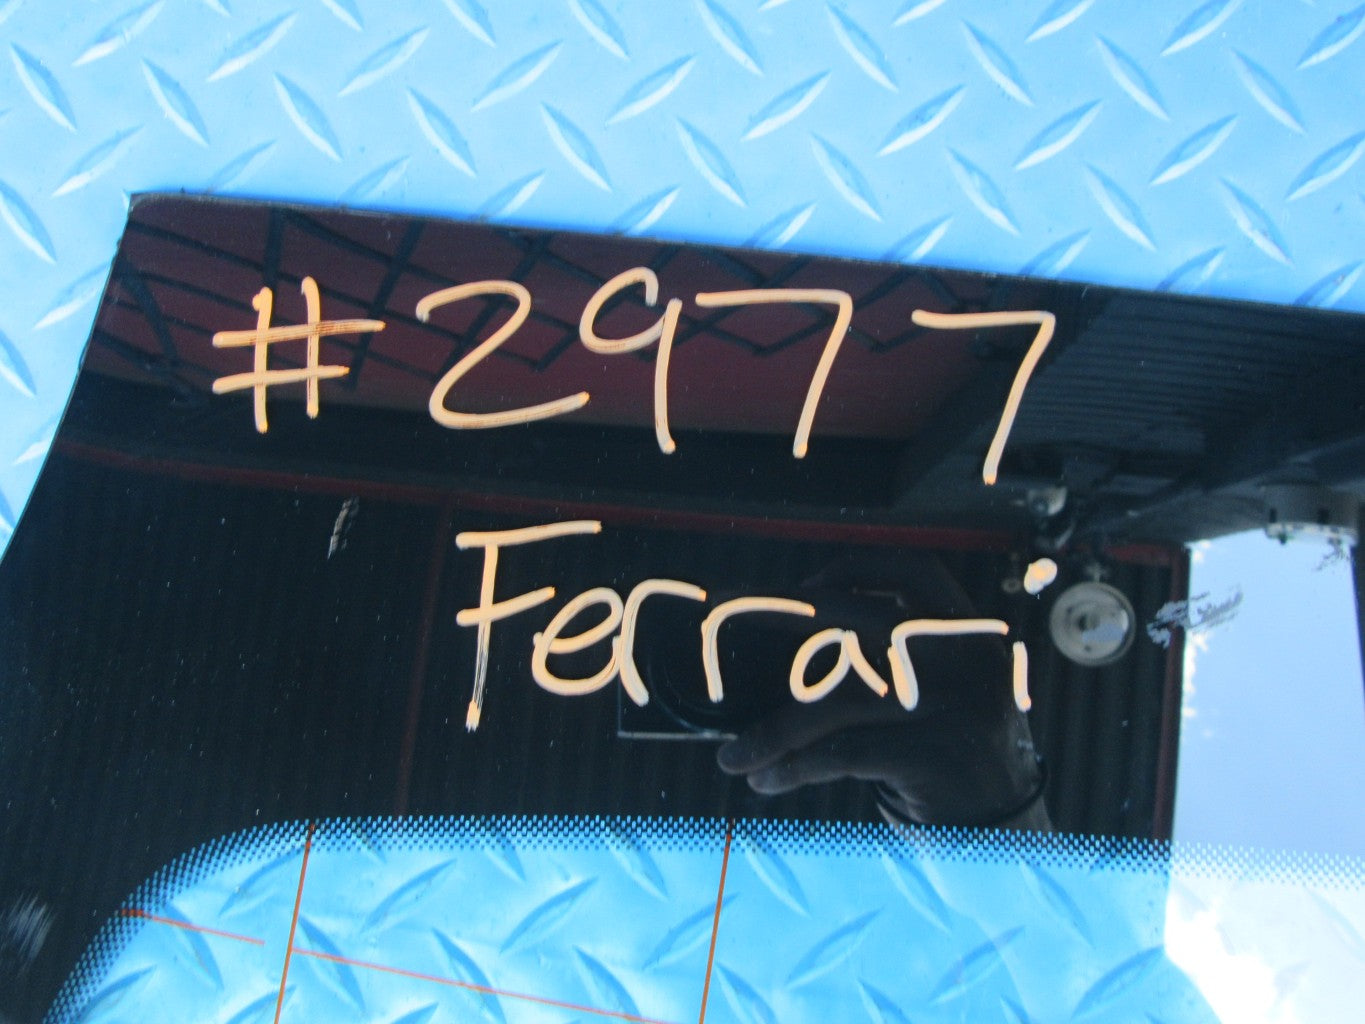 Ferrari 812 Superfast rear back engine glass #2977